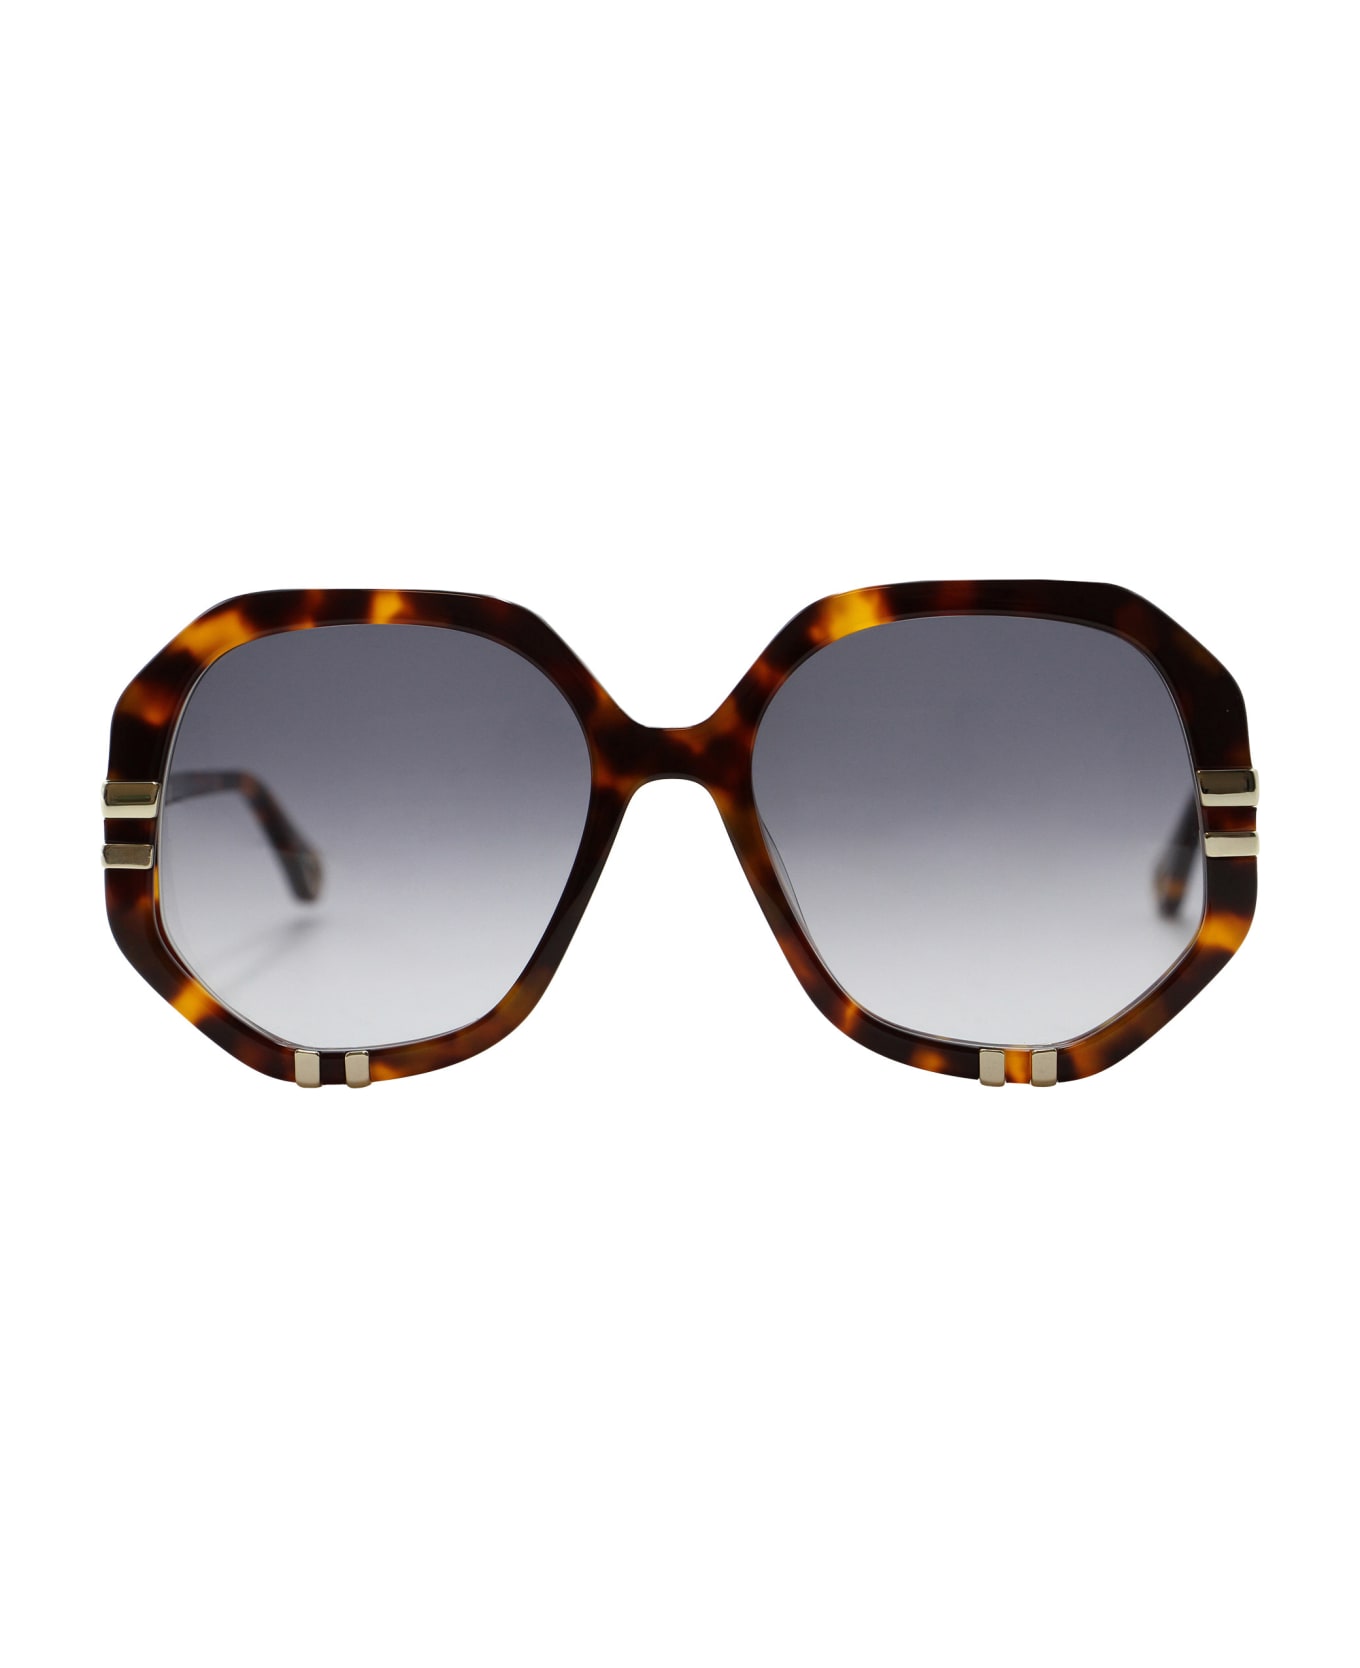 Chloé Squared Sunglasses - brown